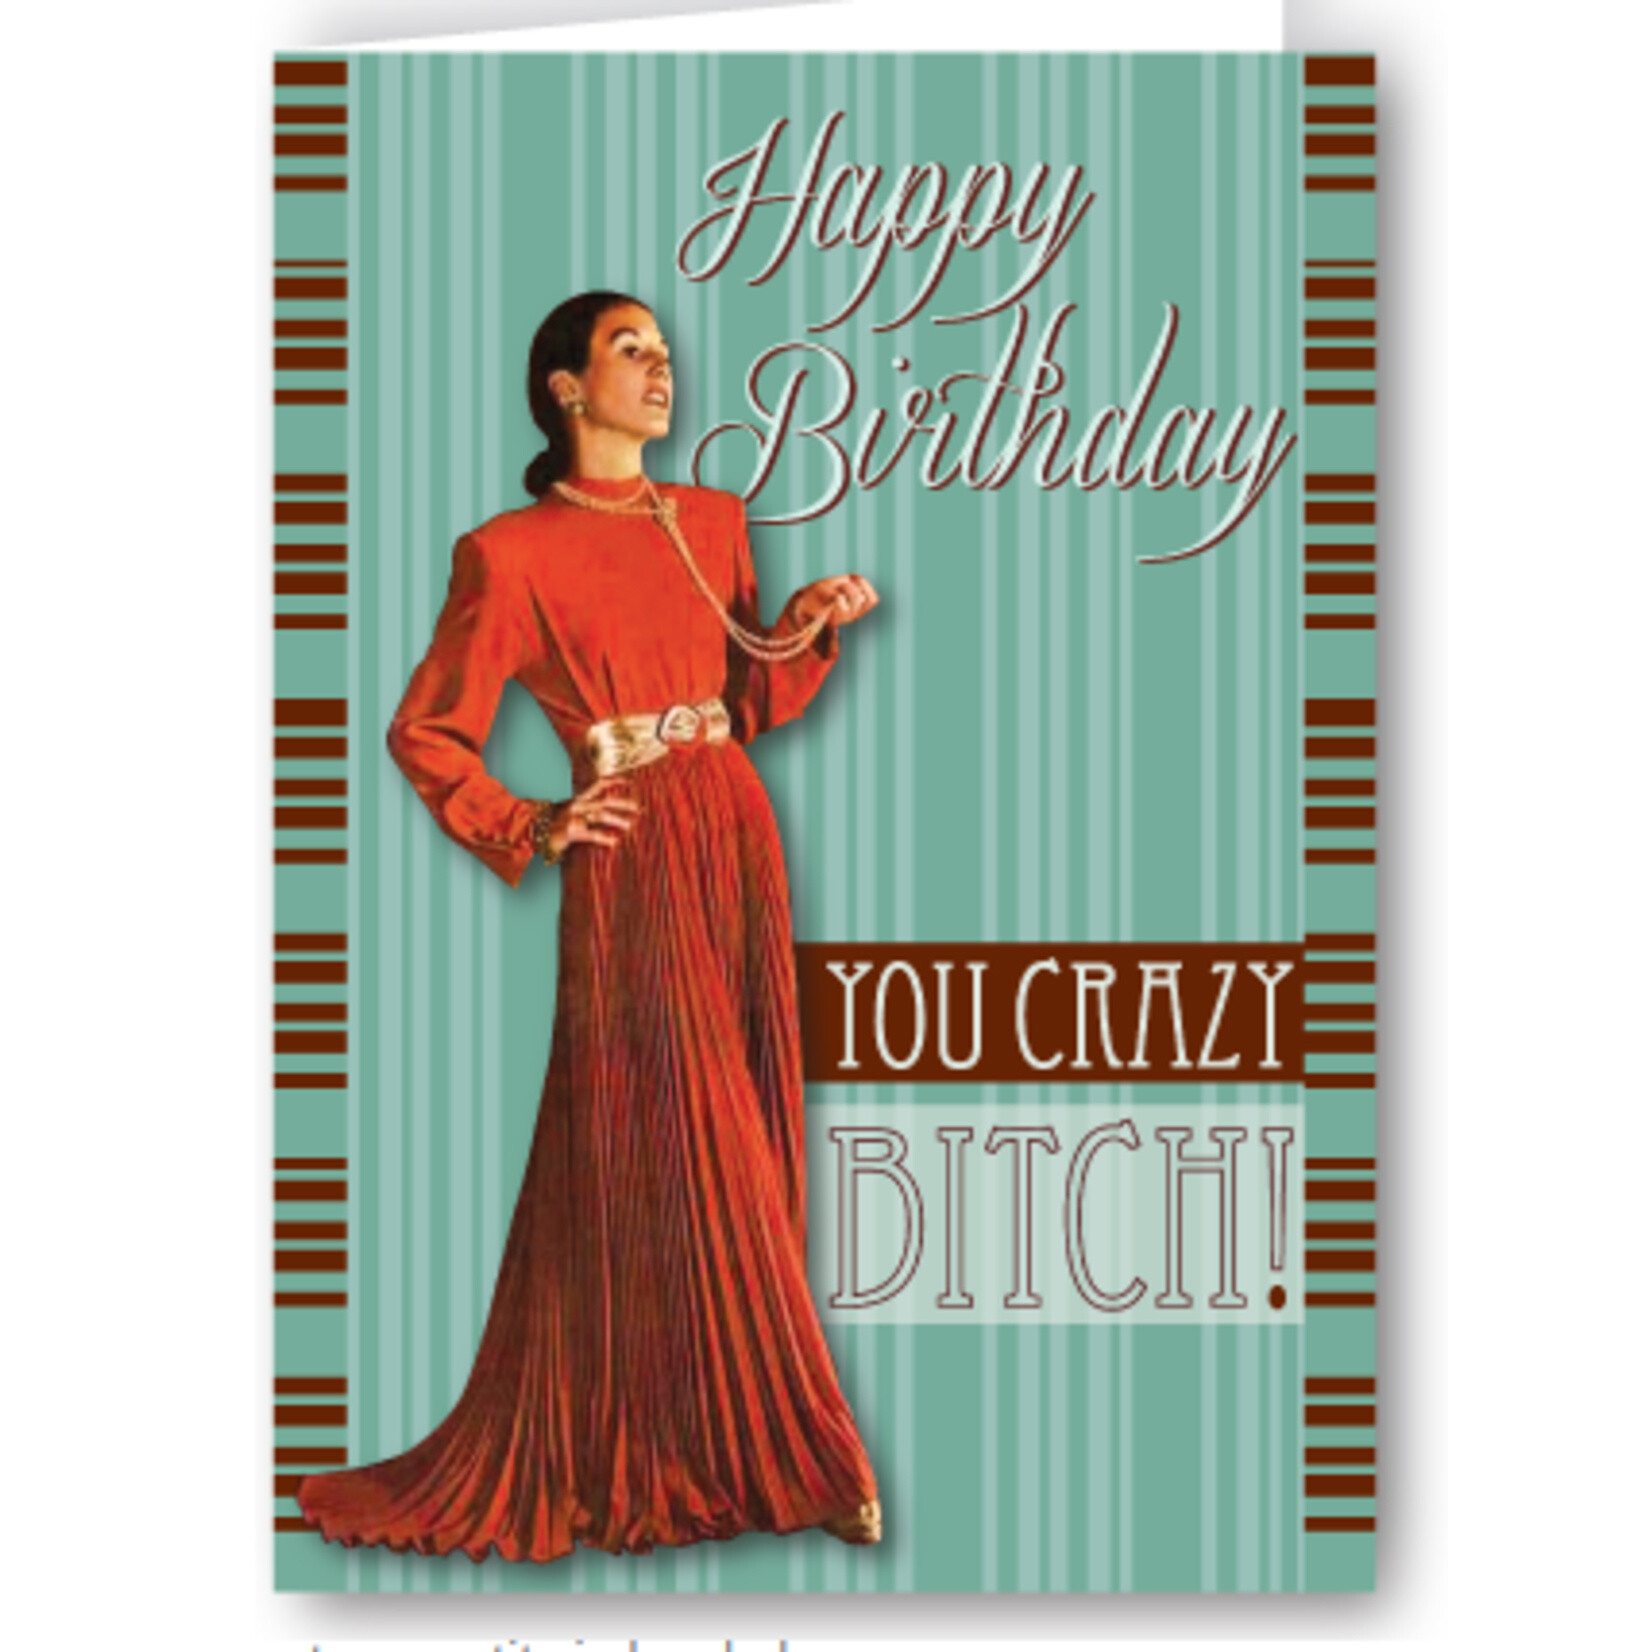 Greeting Card - Happy Birthday You Crazy Bitch!